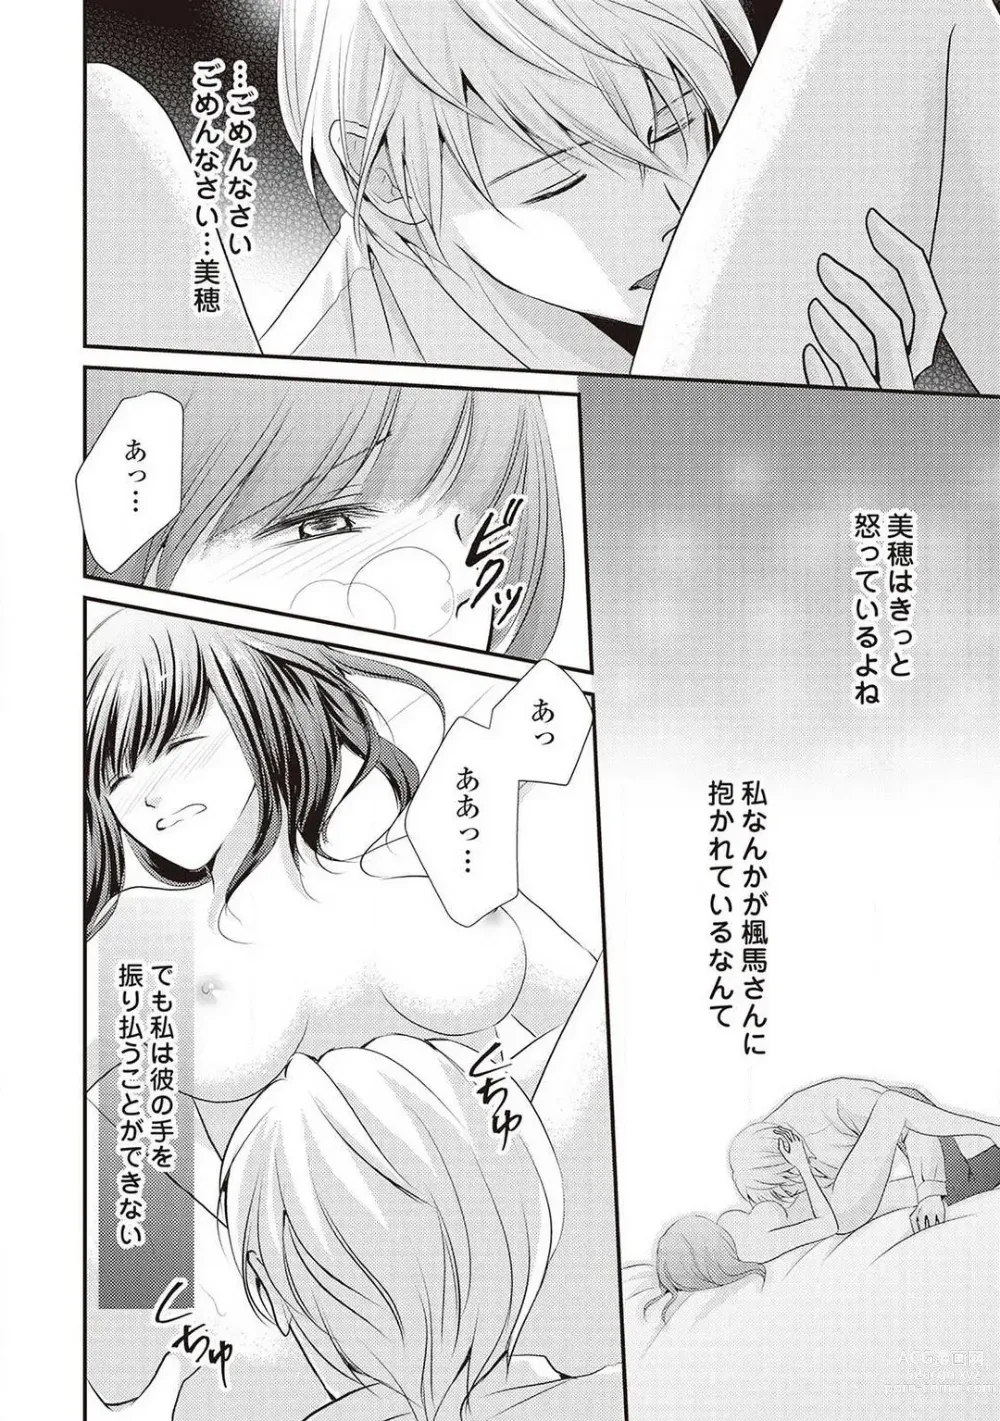 Page 13 of manga Migawari no Konyakusha wa Koi ni Naku.